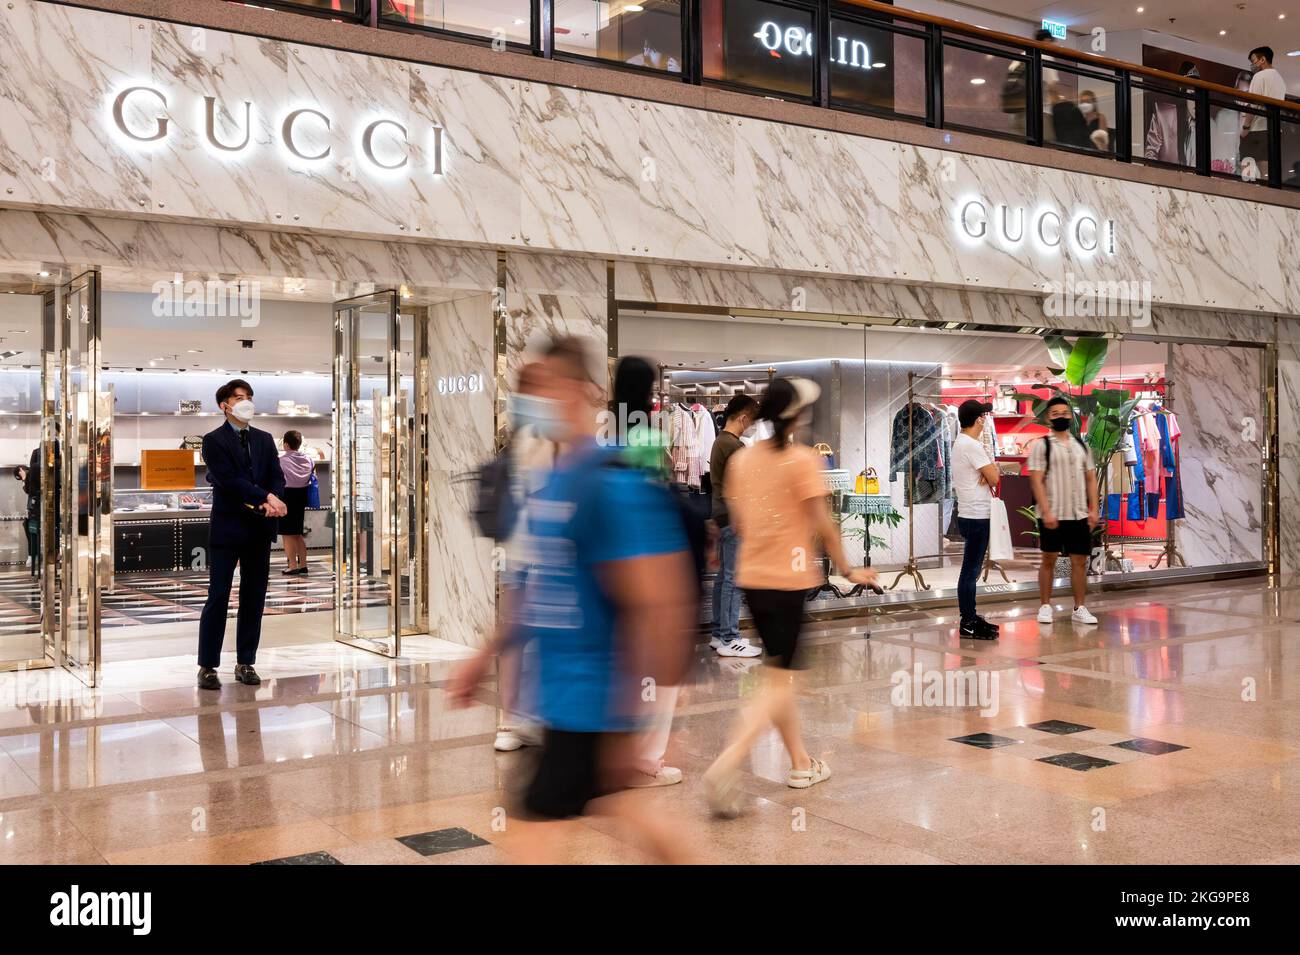 STYLE Edit: Inside Gucci's grand Hong Kong flagship refurb – the